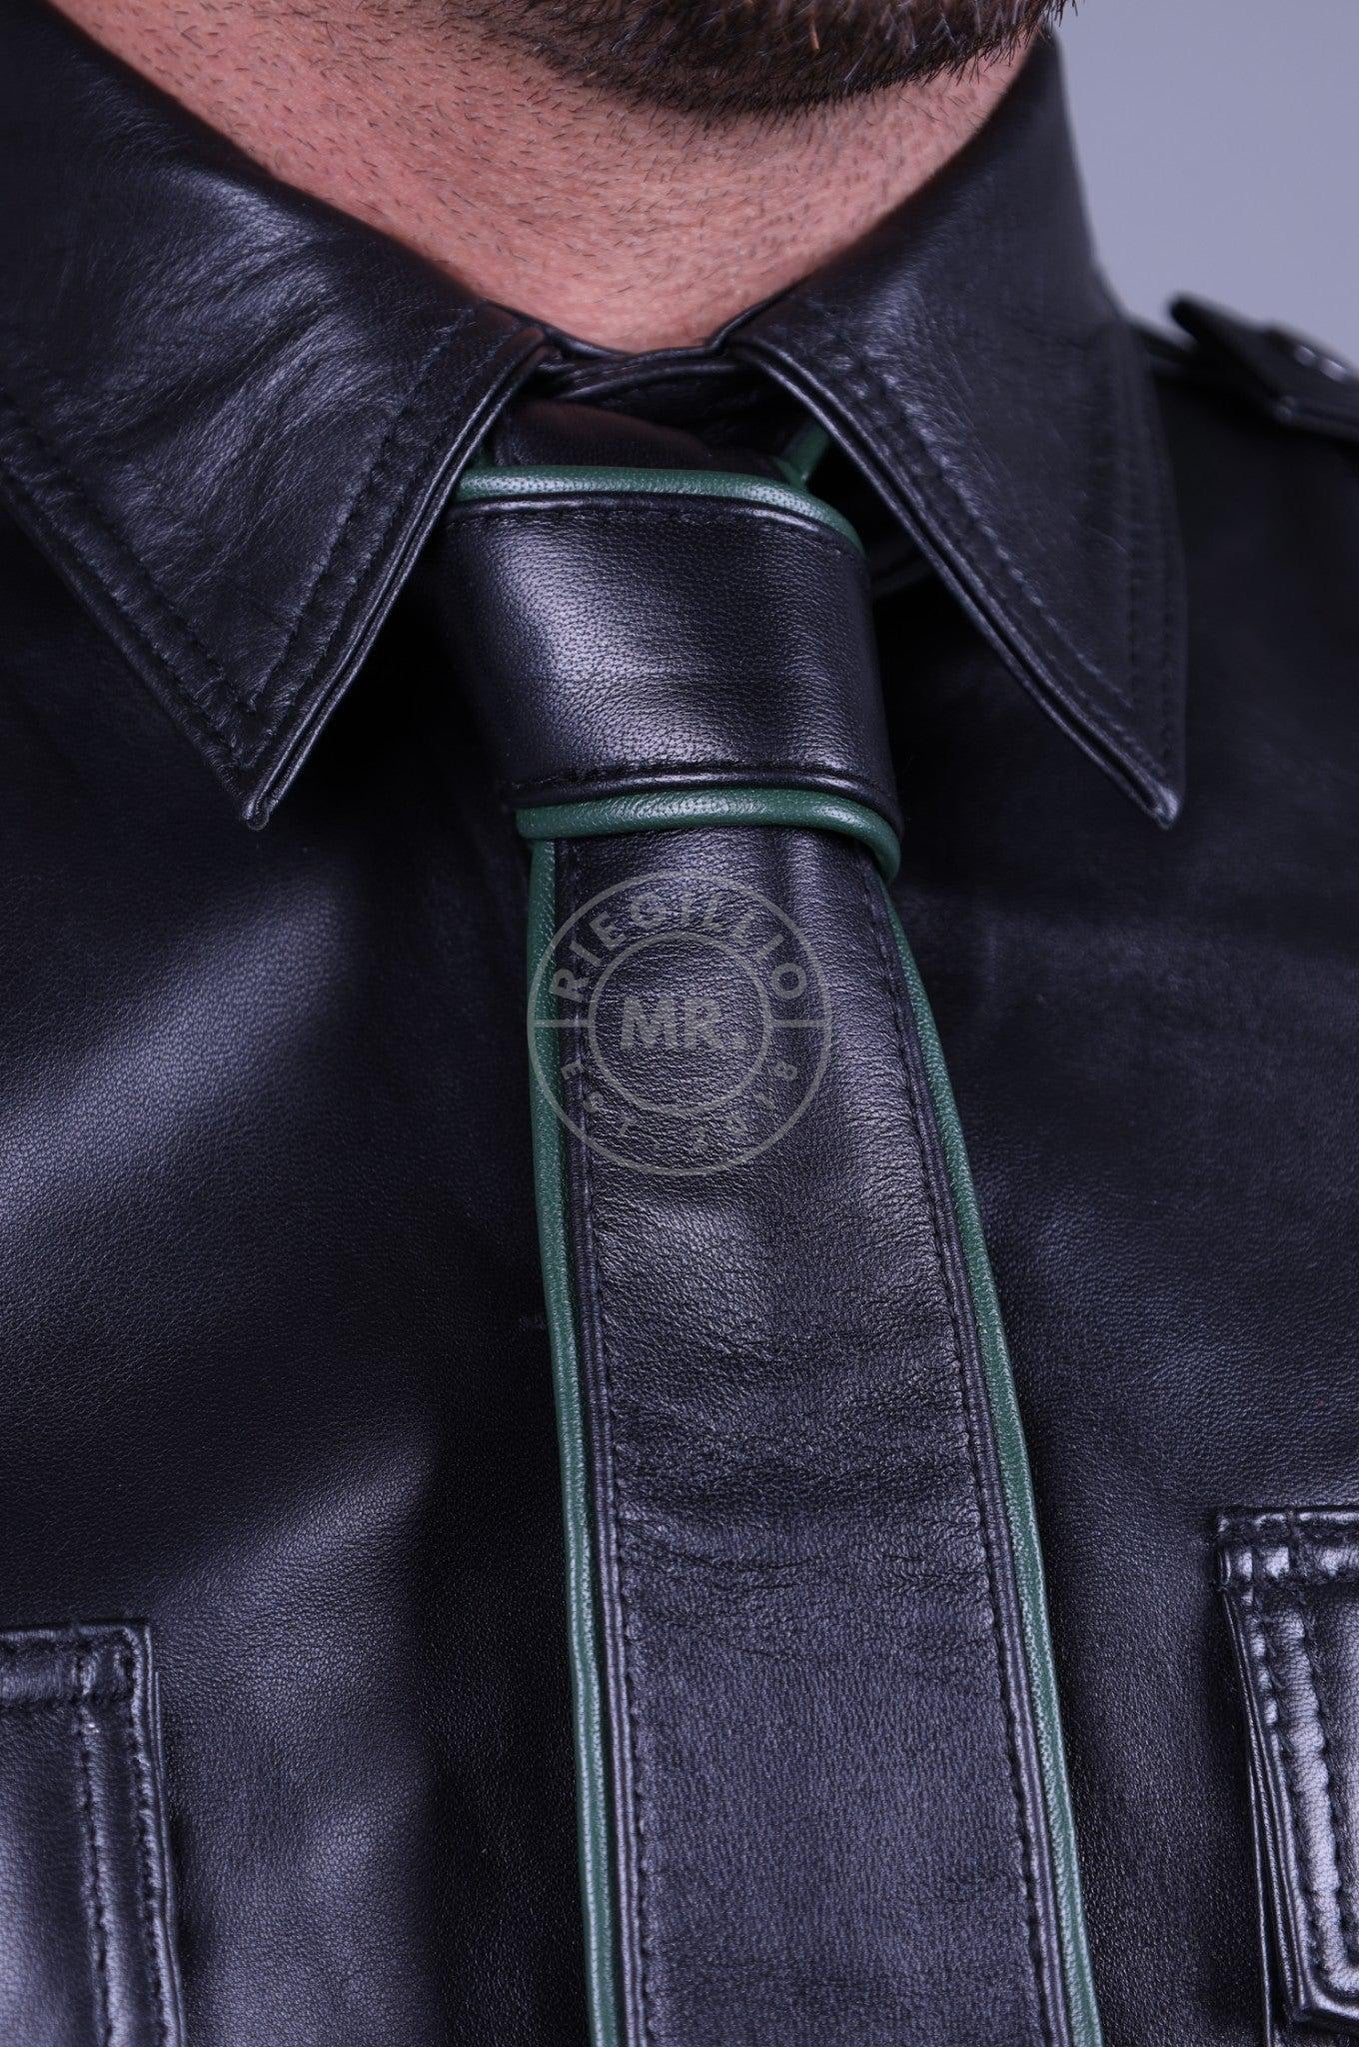 Black Leather Tie - DARK GREEN Piping at MR. Riegillio